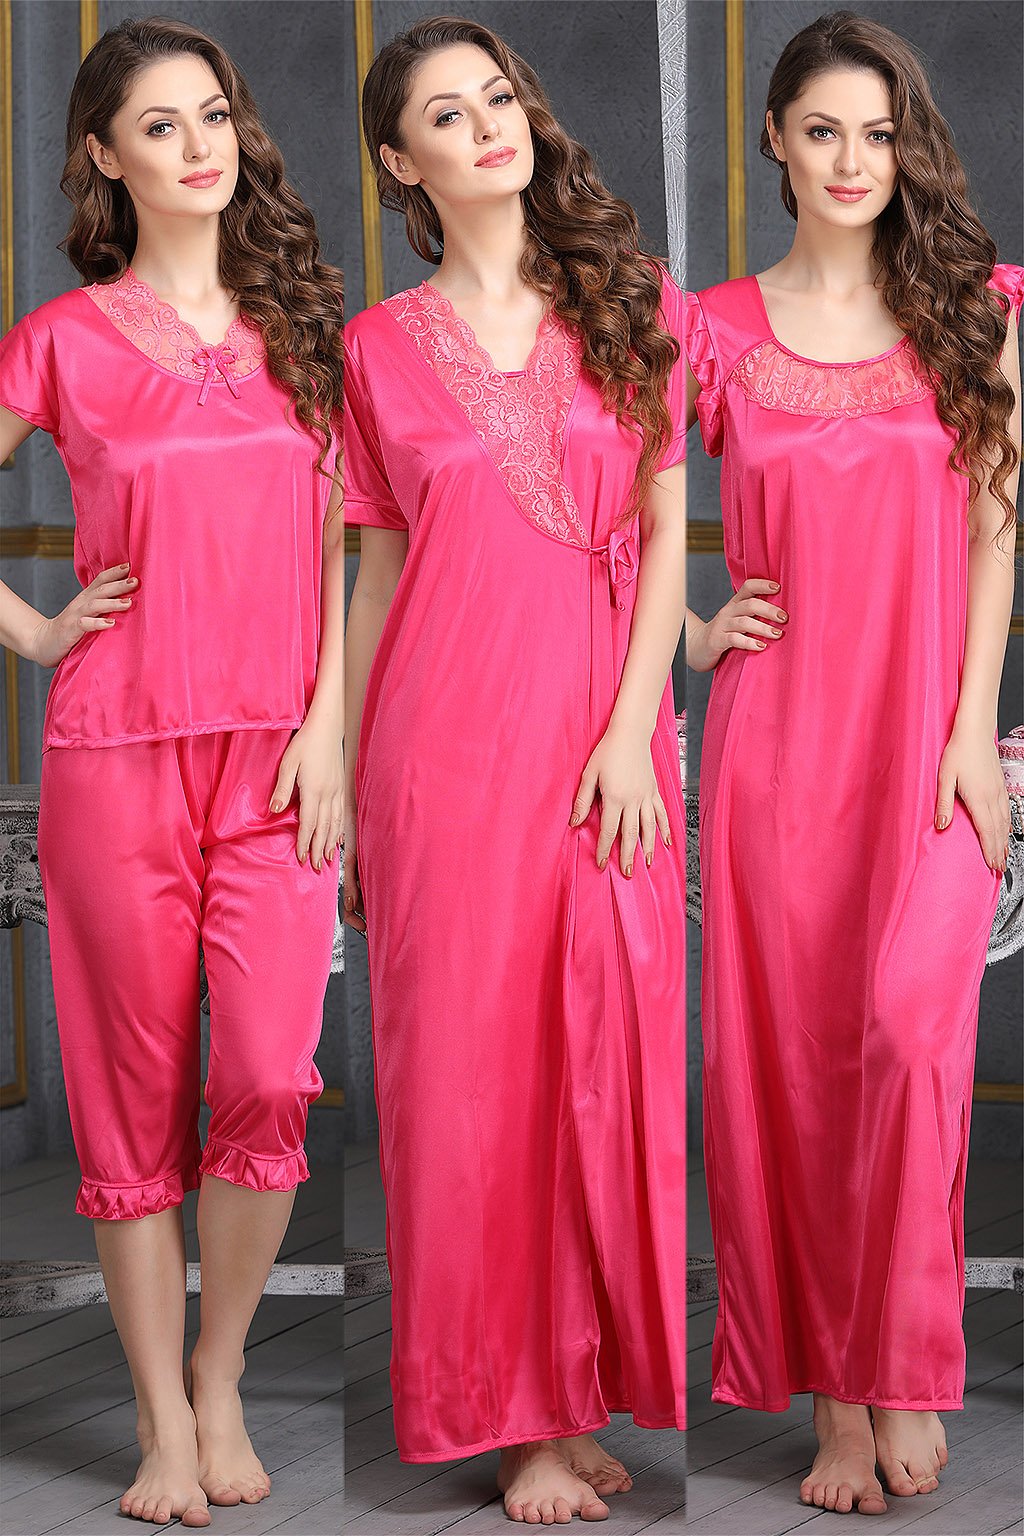 4 Pcs Satin Nightwear In Reddish Pink – Robe, Nightie, Top, Capri